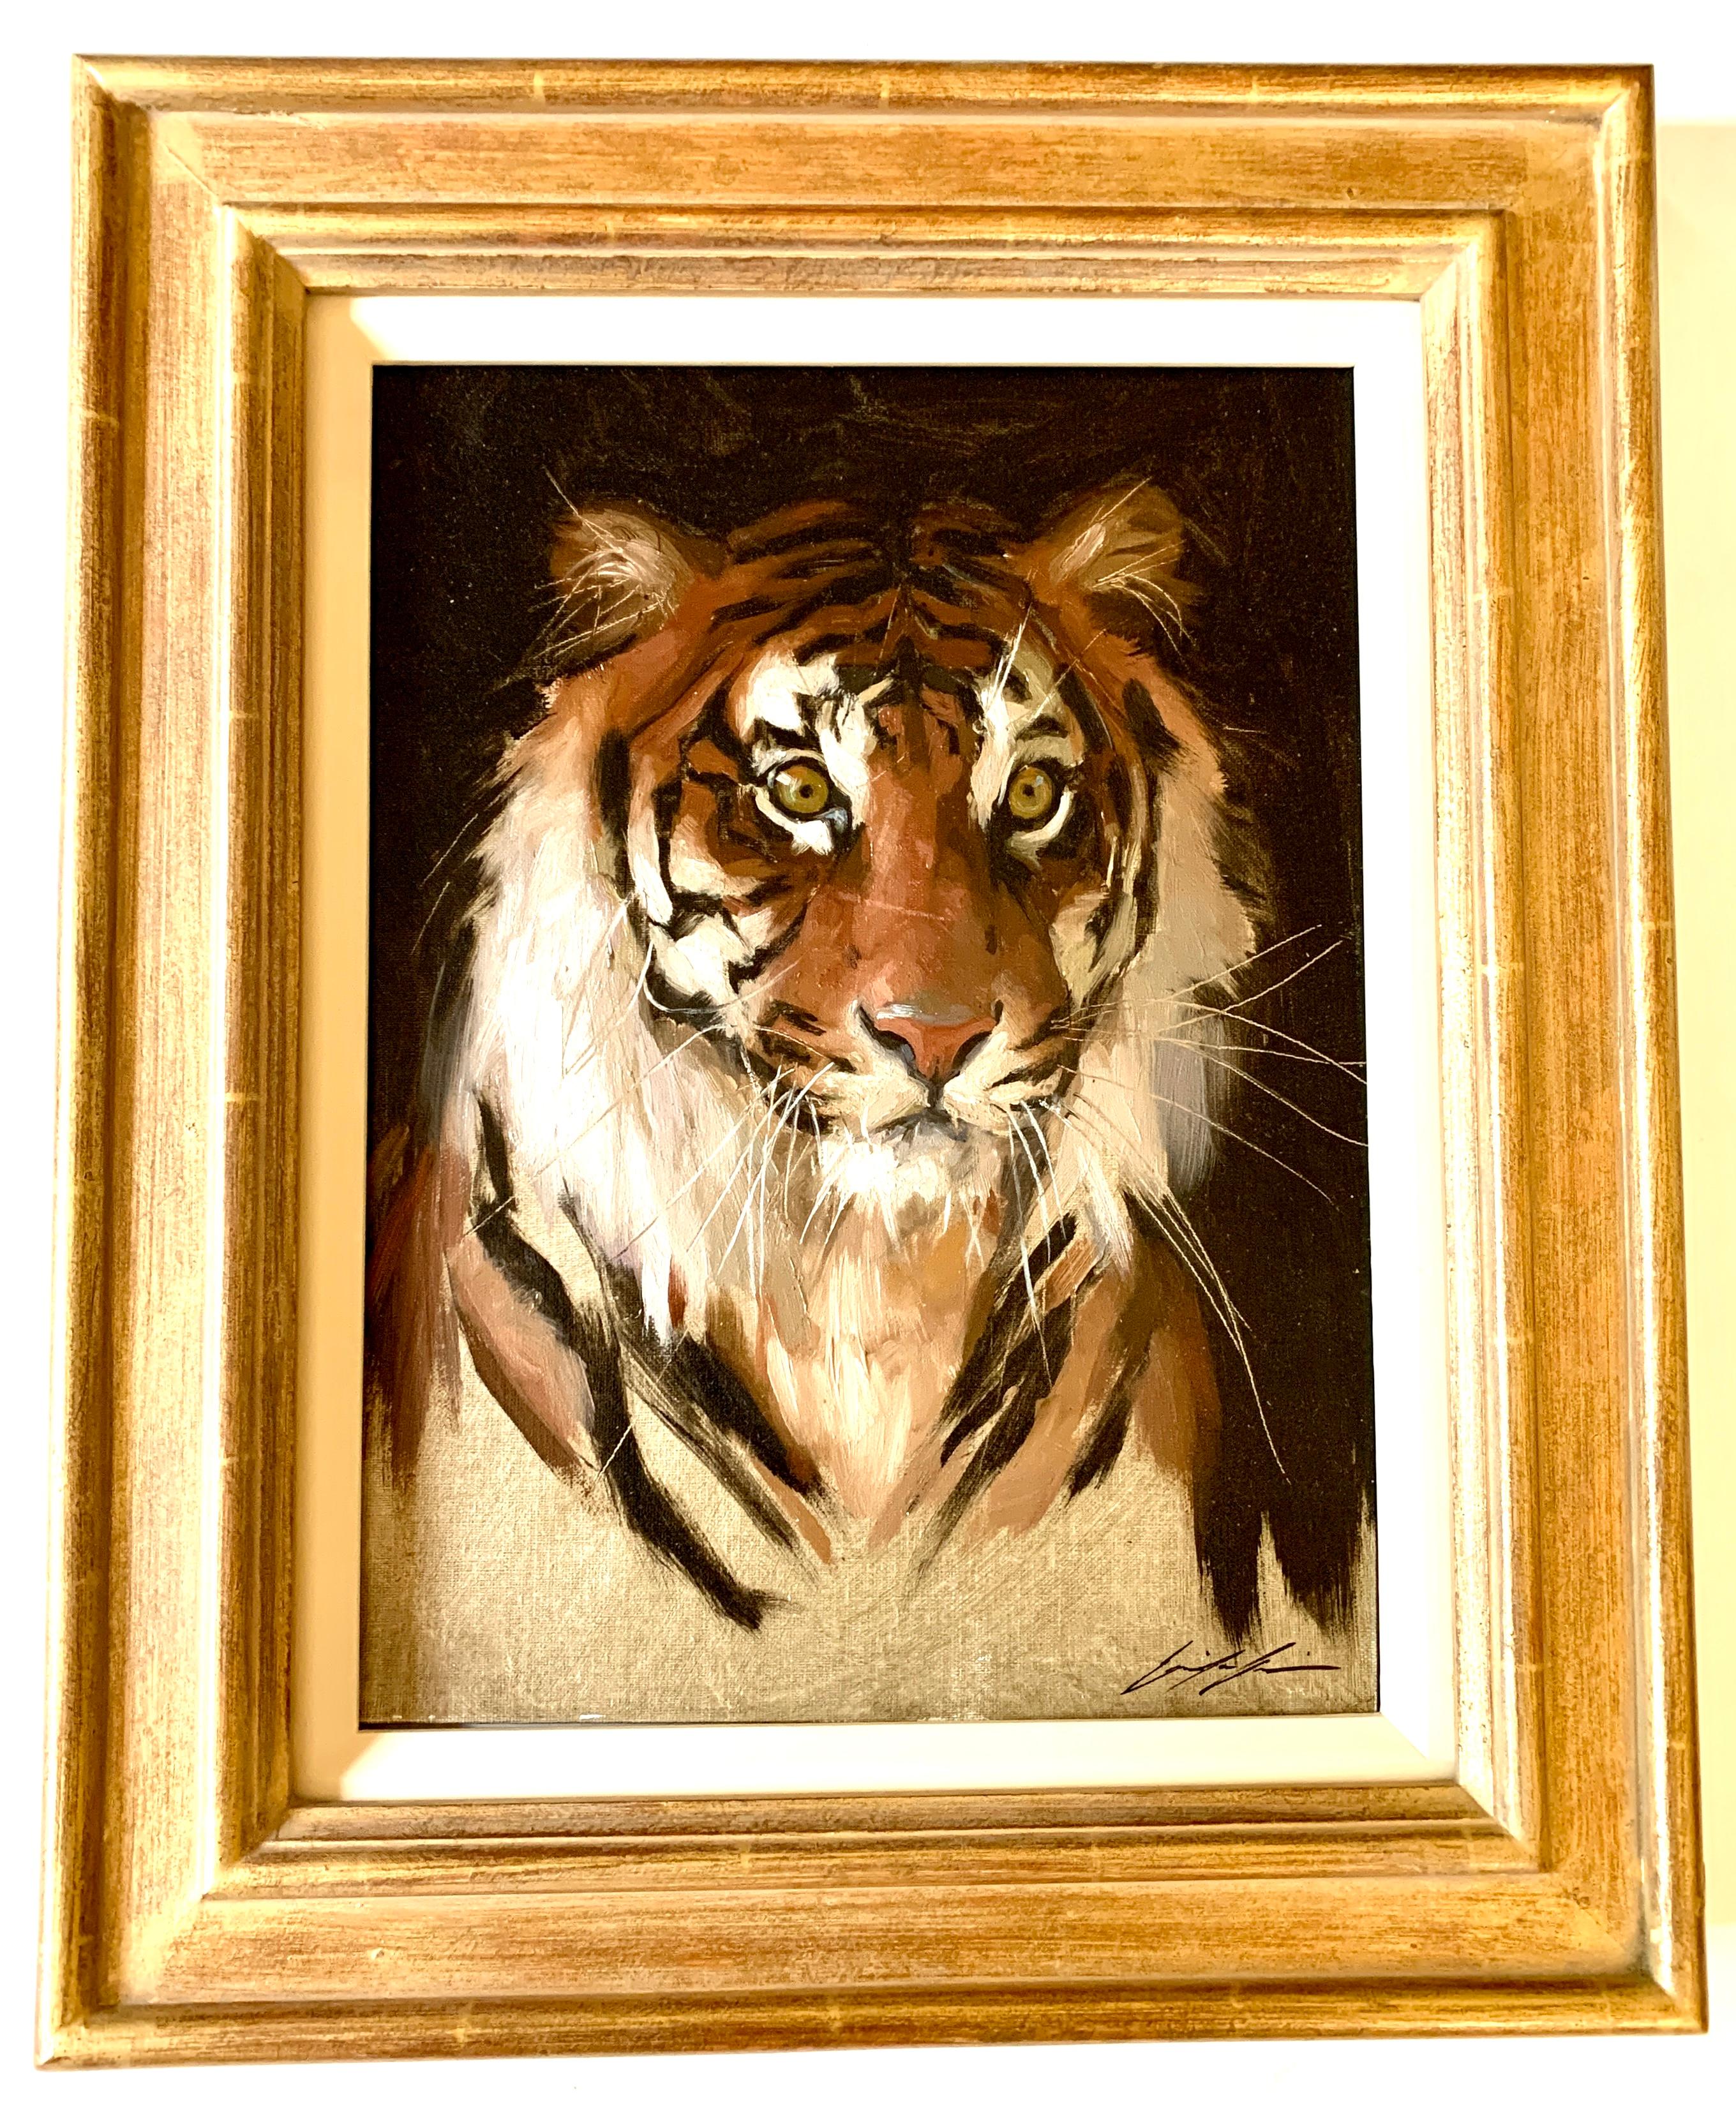 Jennifer Gennari Portrait Painting - Portrait of a Tiger, looking at the painter/artist